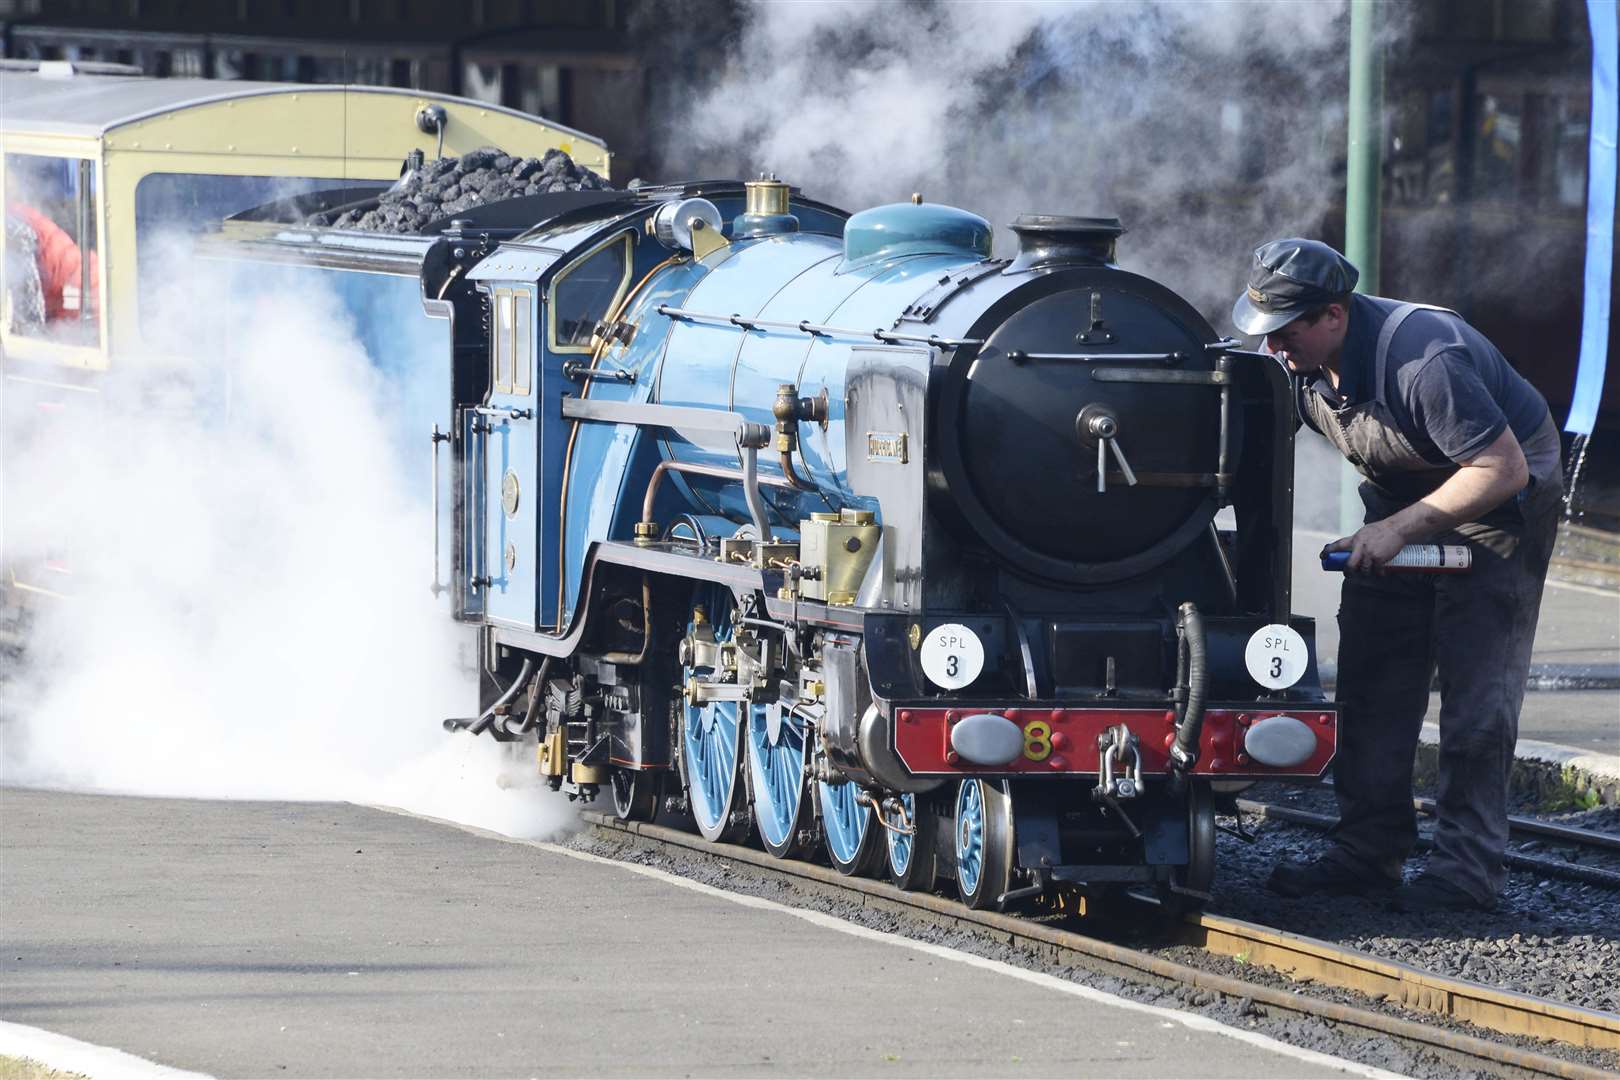 Romney, Hythe and Dymchurch Railway runs for more than 13 miles